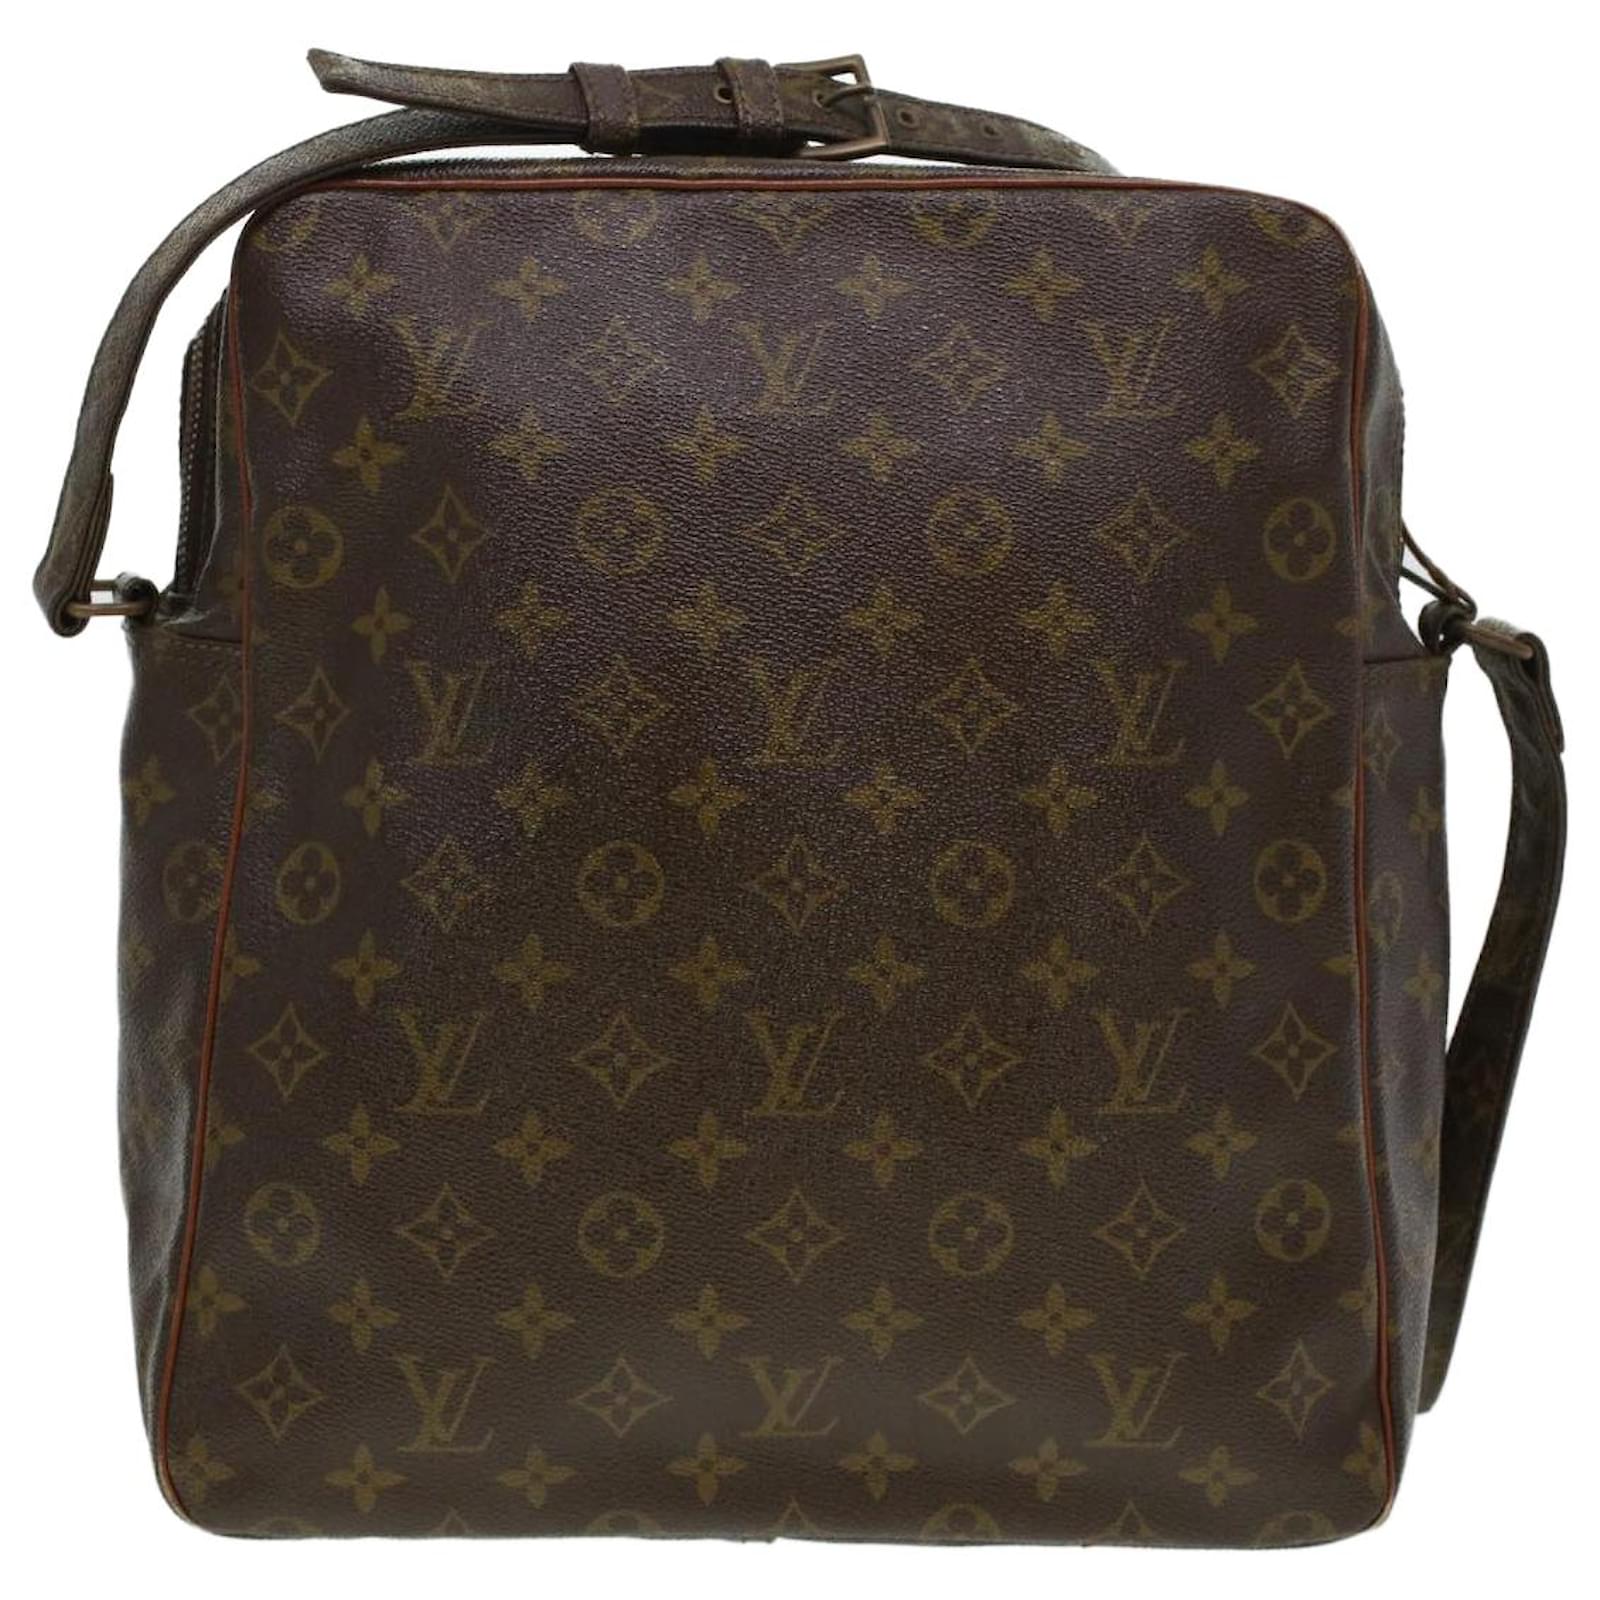 Marceau messenger leather crossbody bag Louis Vuitton Brown in